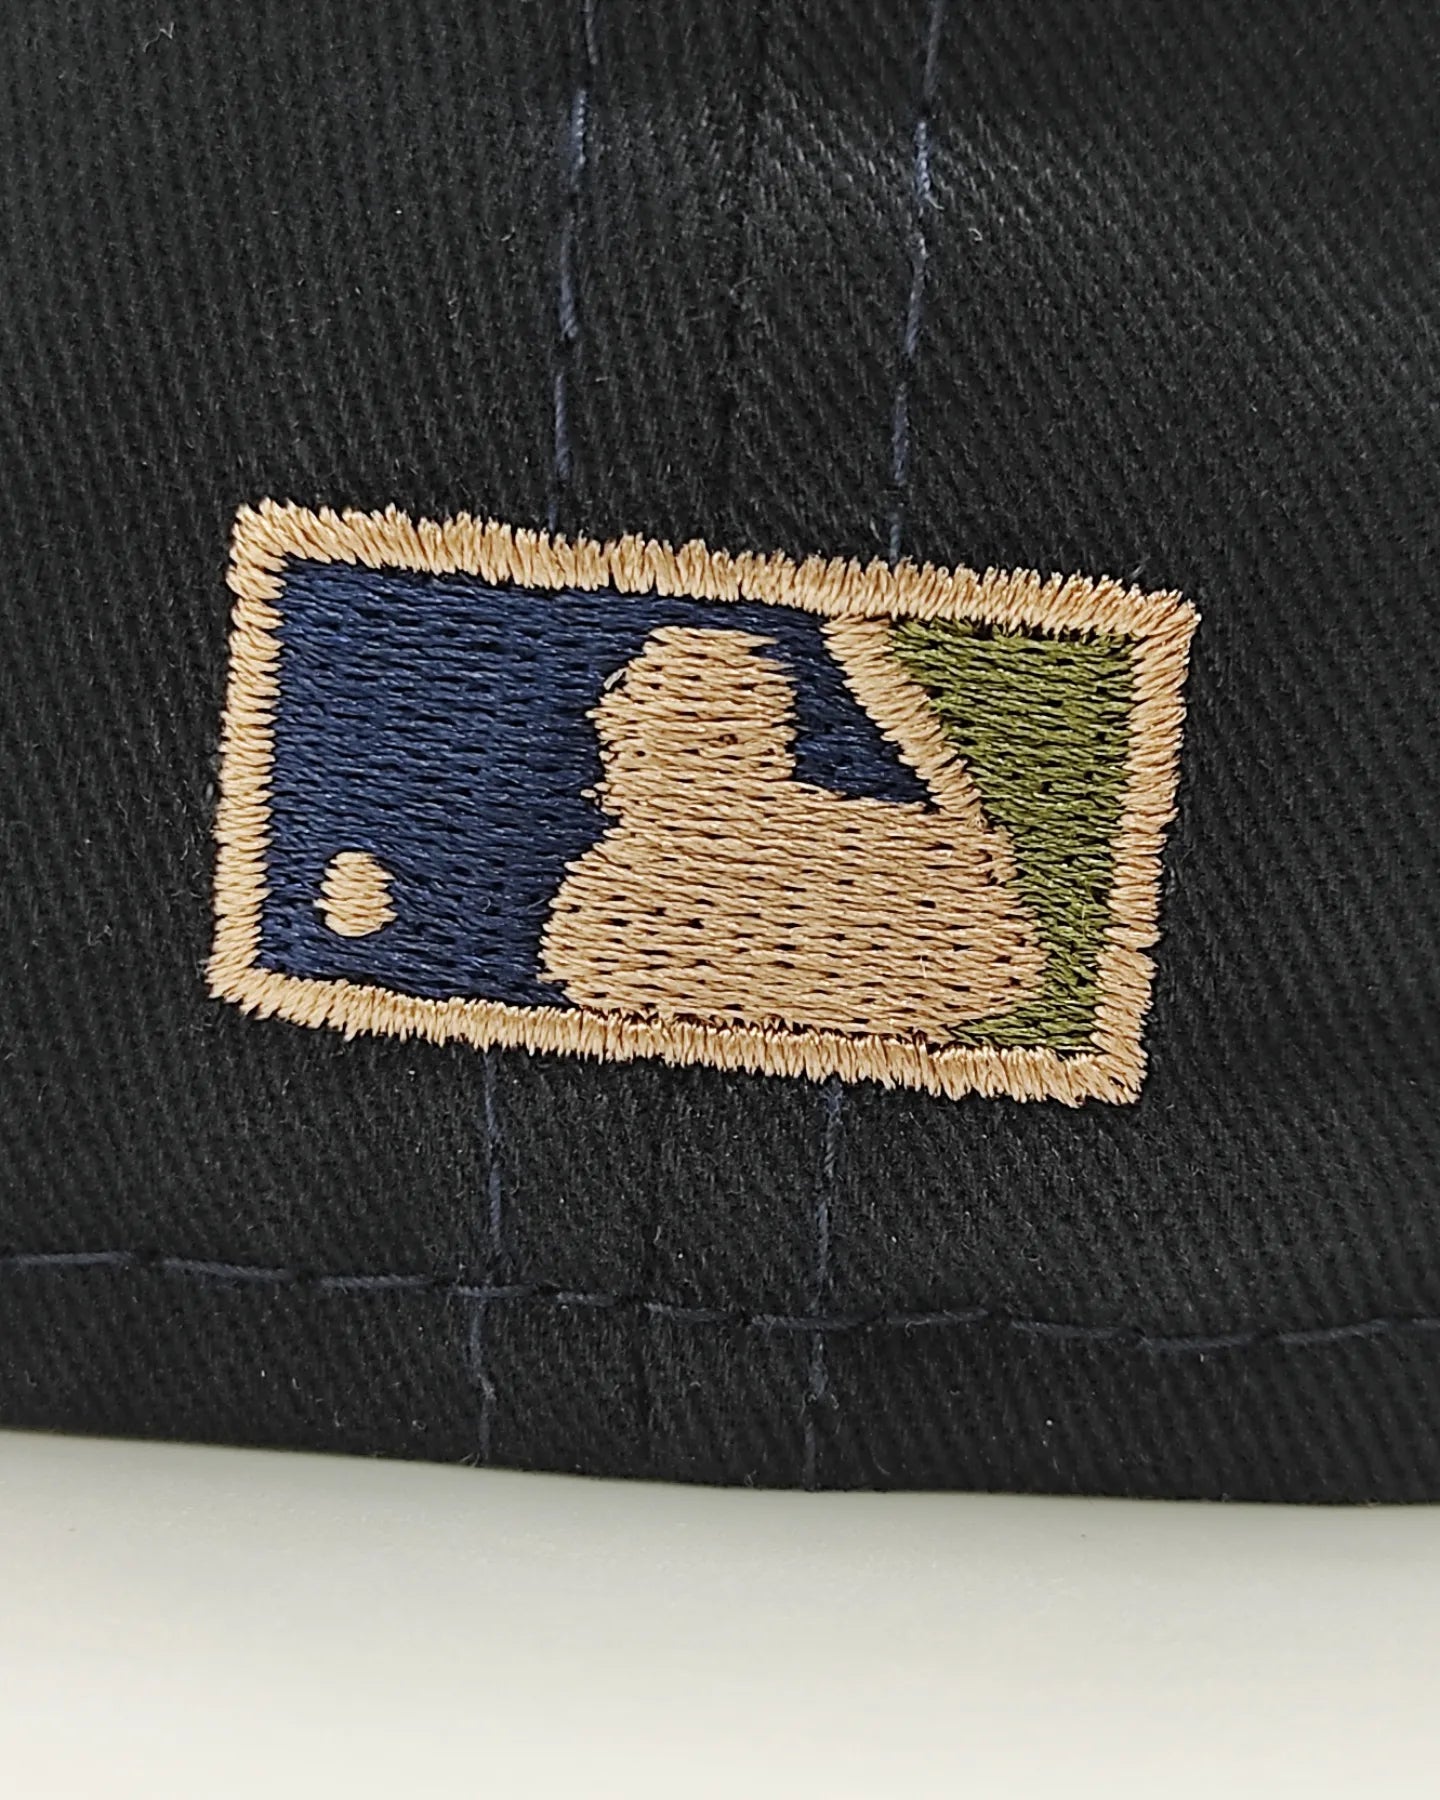 New Era 59fifty fall tones Minnesota Twins anniversary patch hat - navy, olive